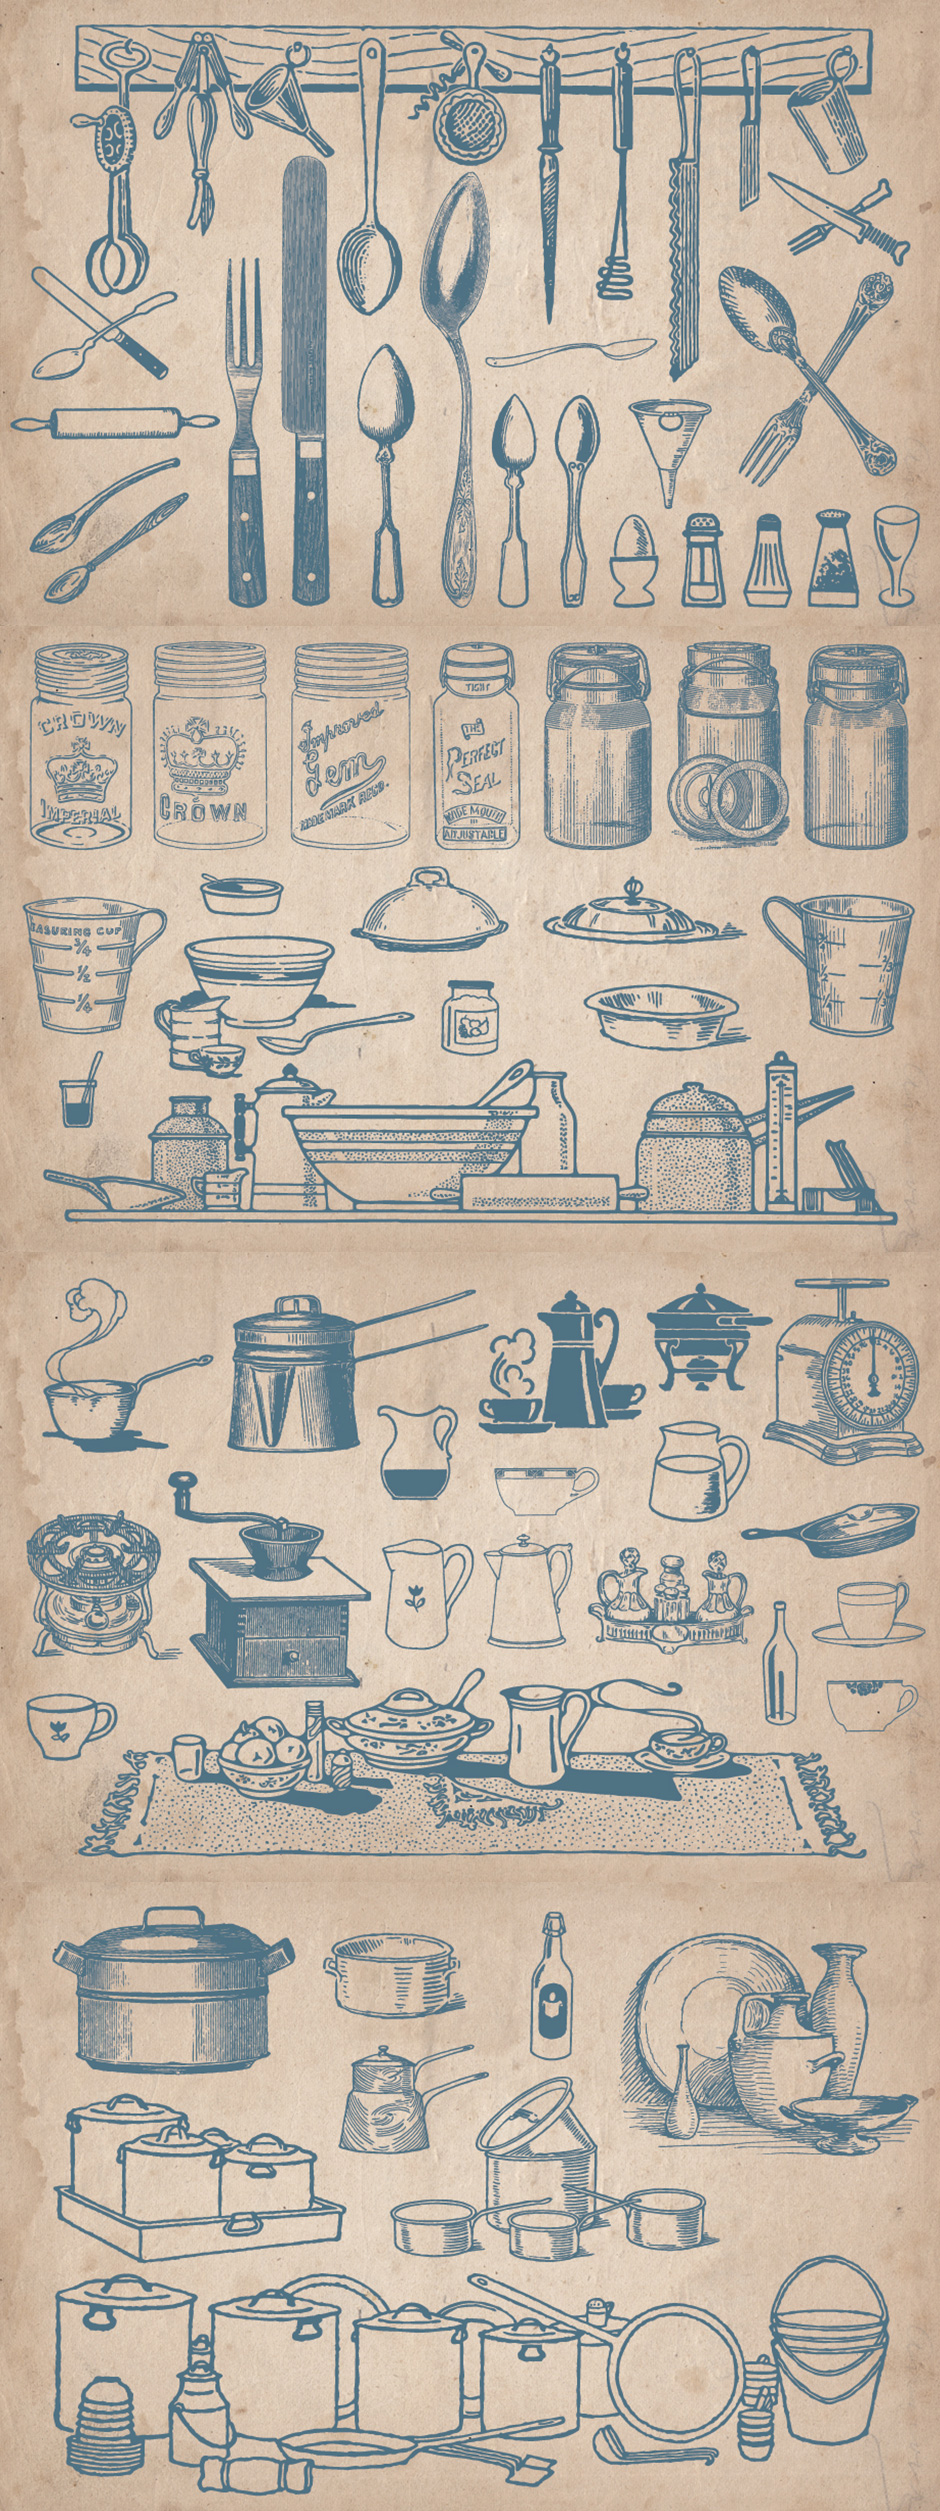 64 Vintage Kitchenware Elements